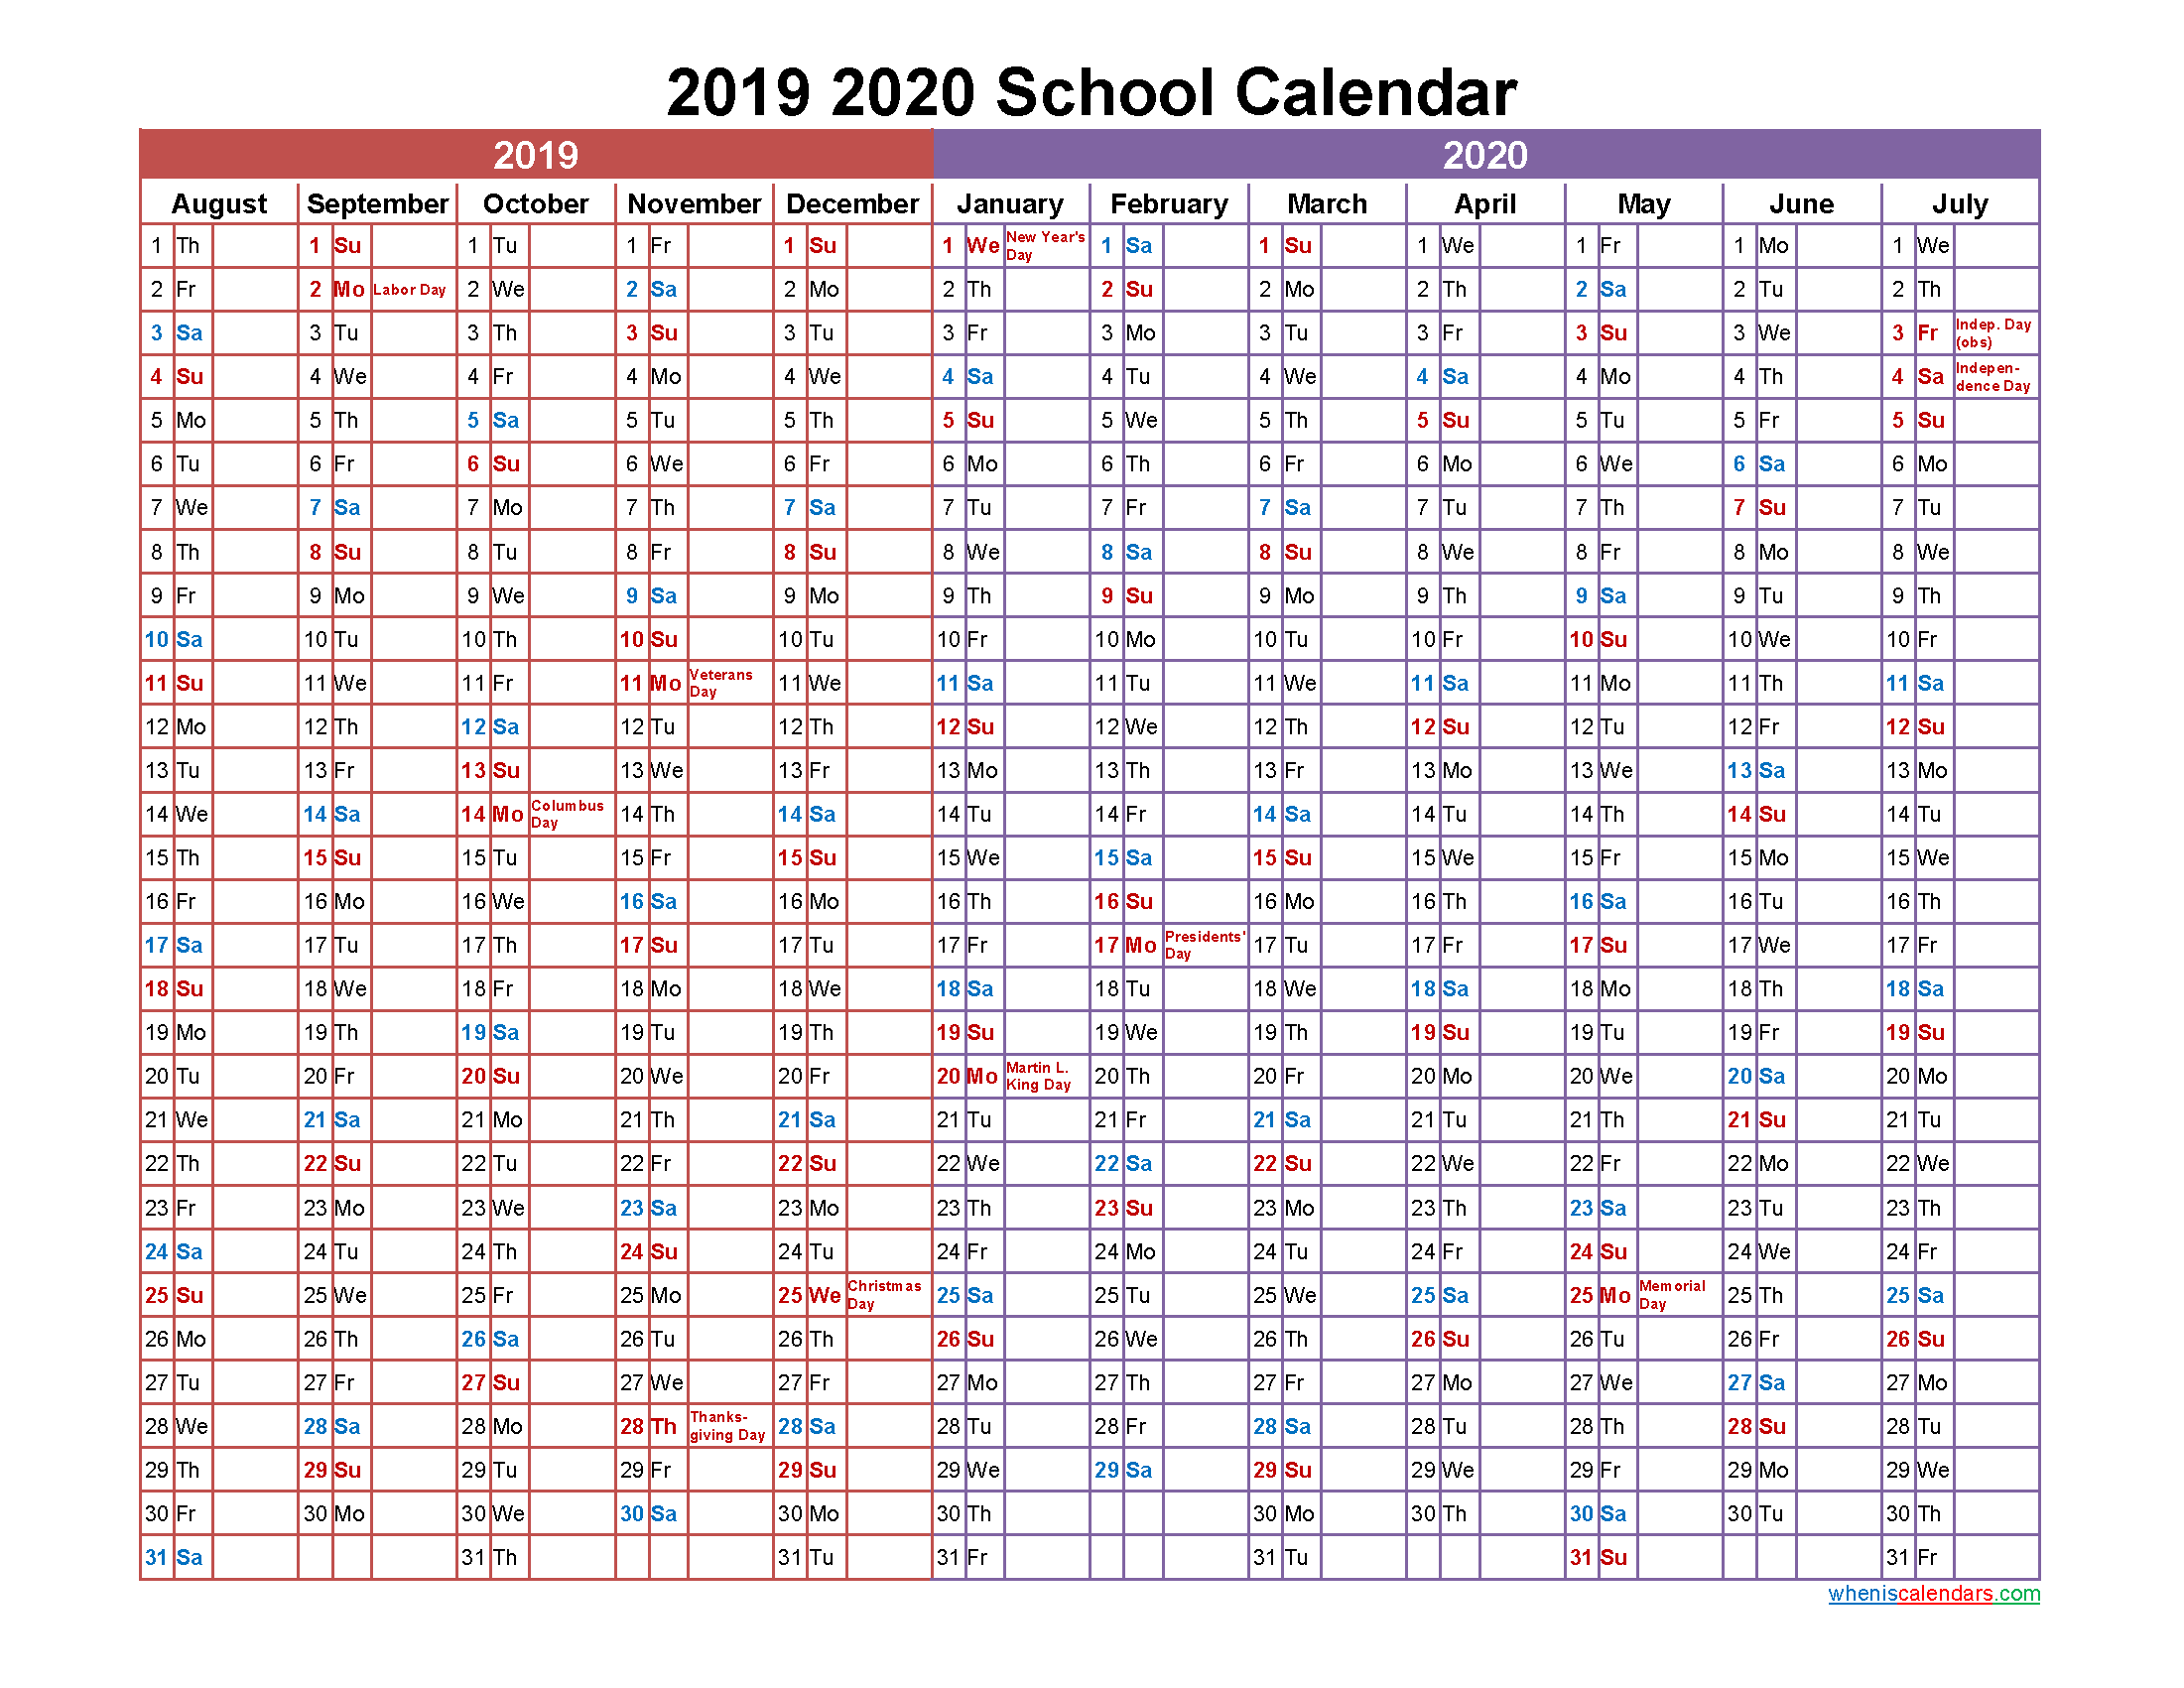 2019 and 2020 School Calendar Printable - Template No.20scl8